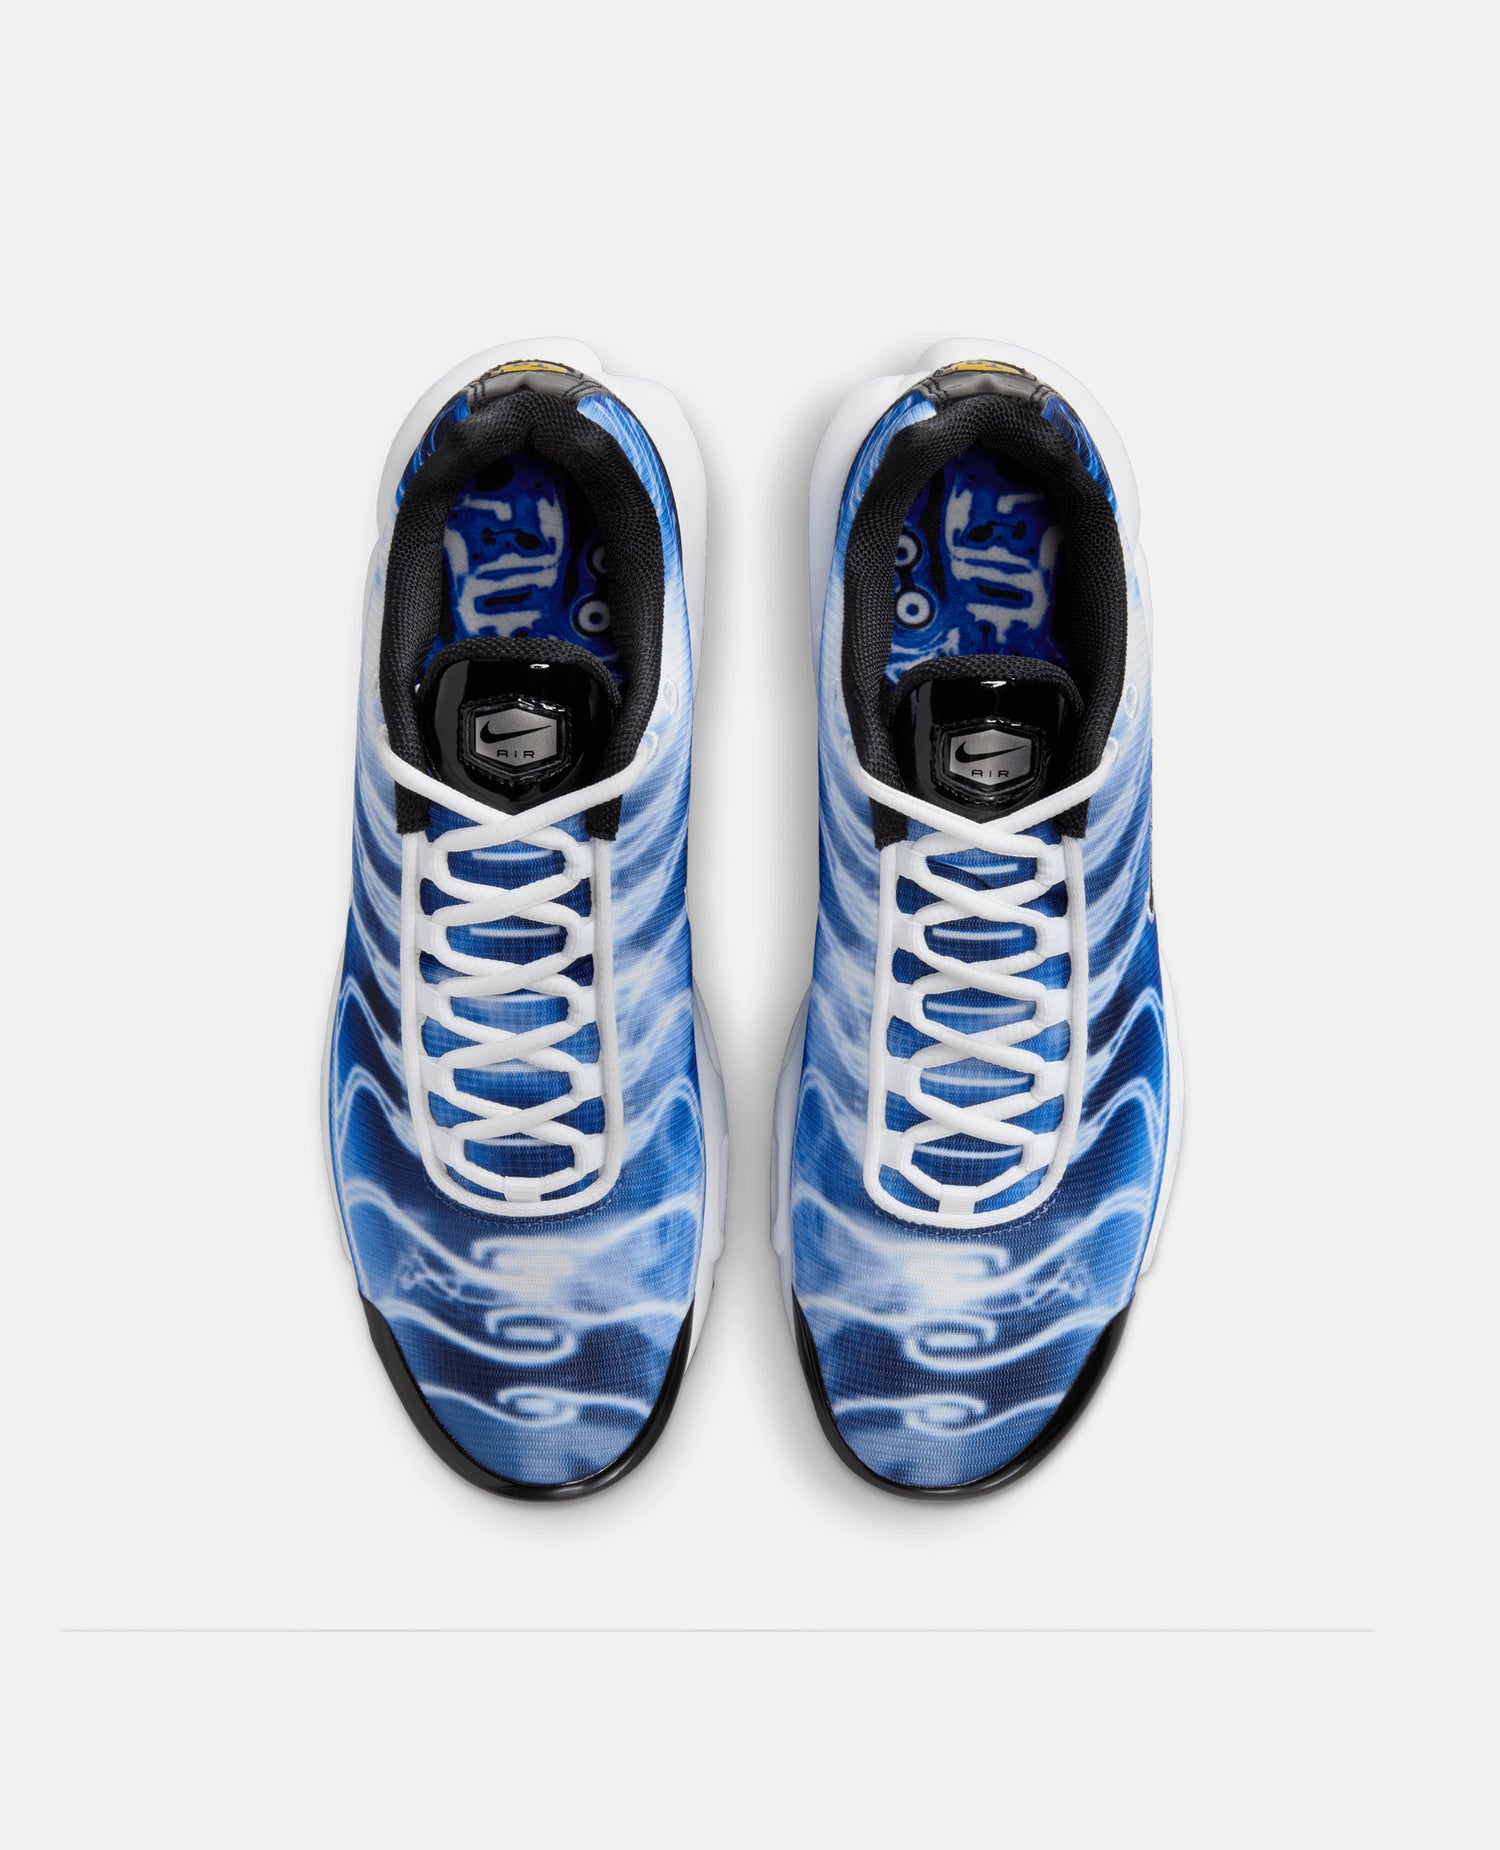 Nike Air Max Plus OG (Old Royal/Black-Varsity Royal-Ice Blue)